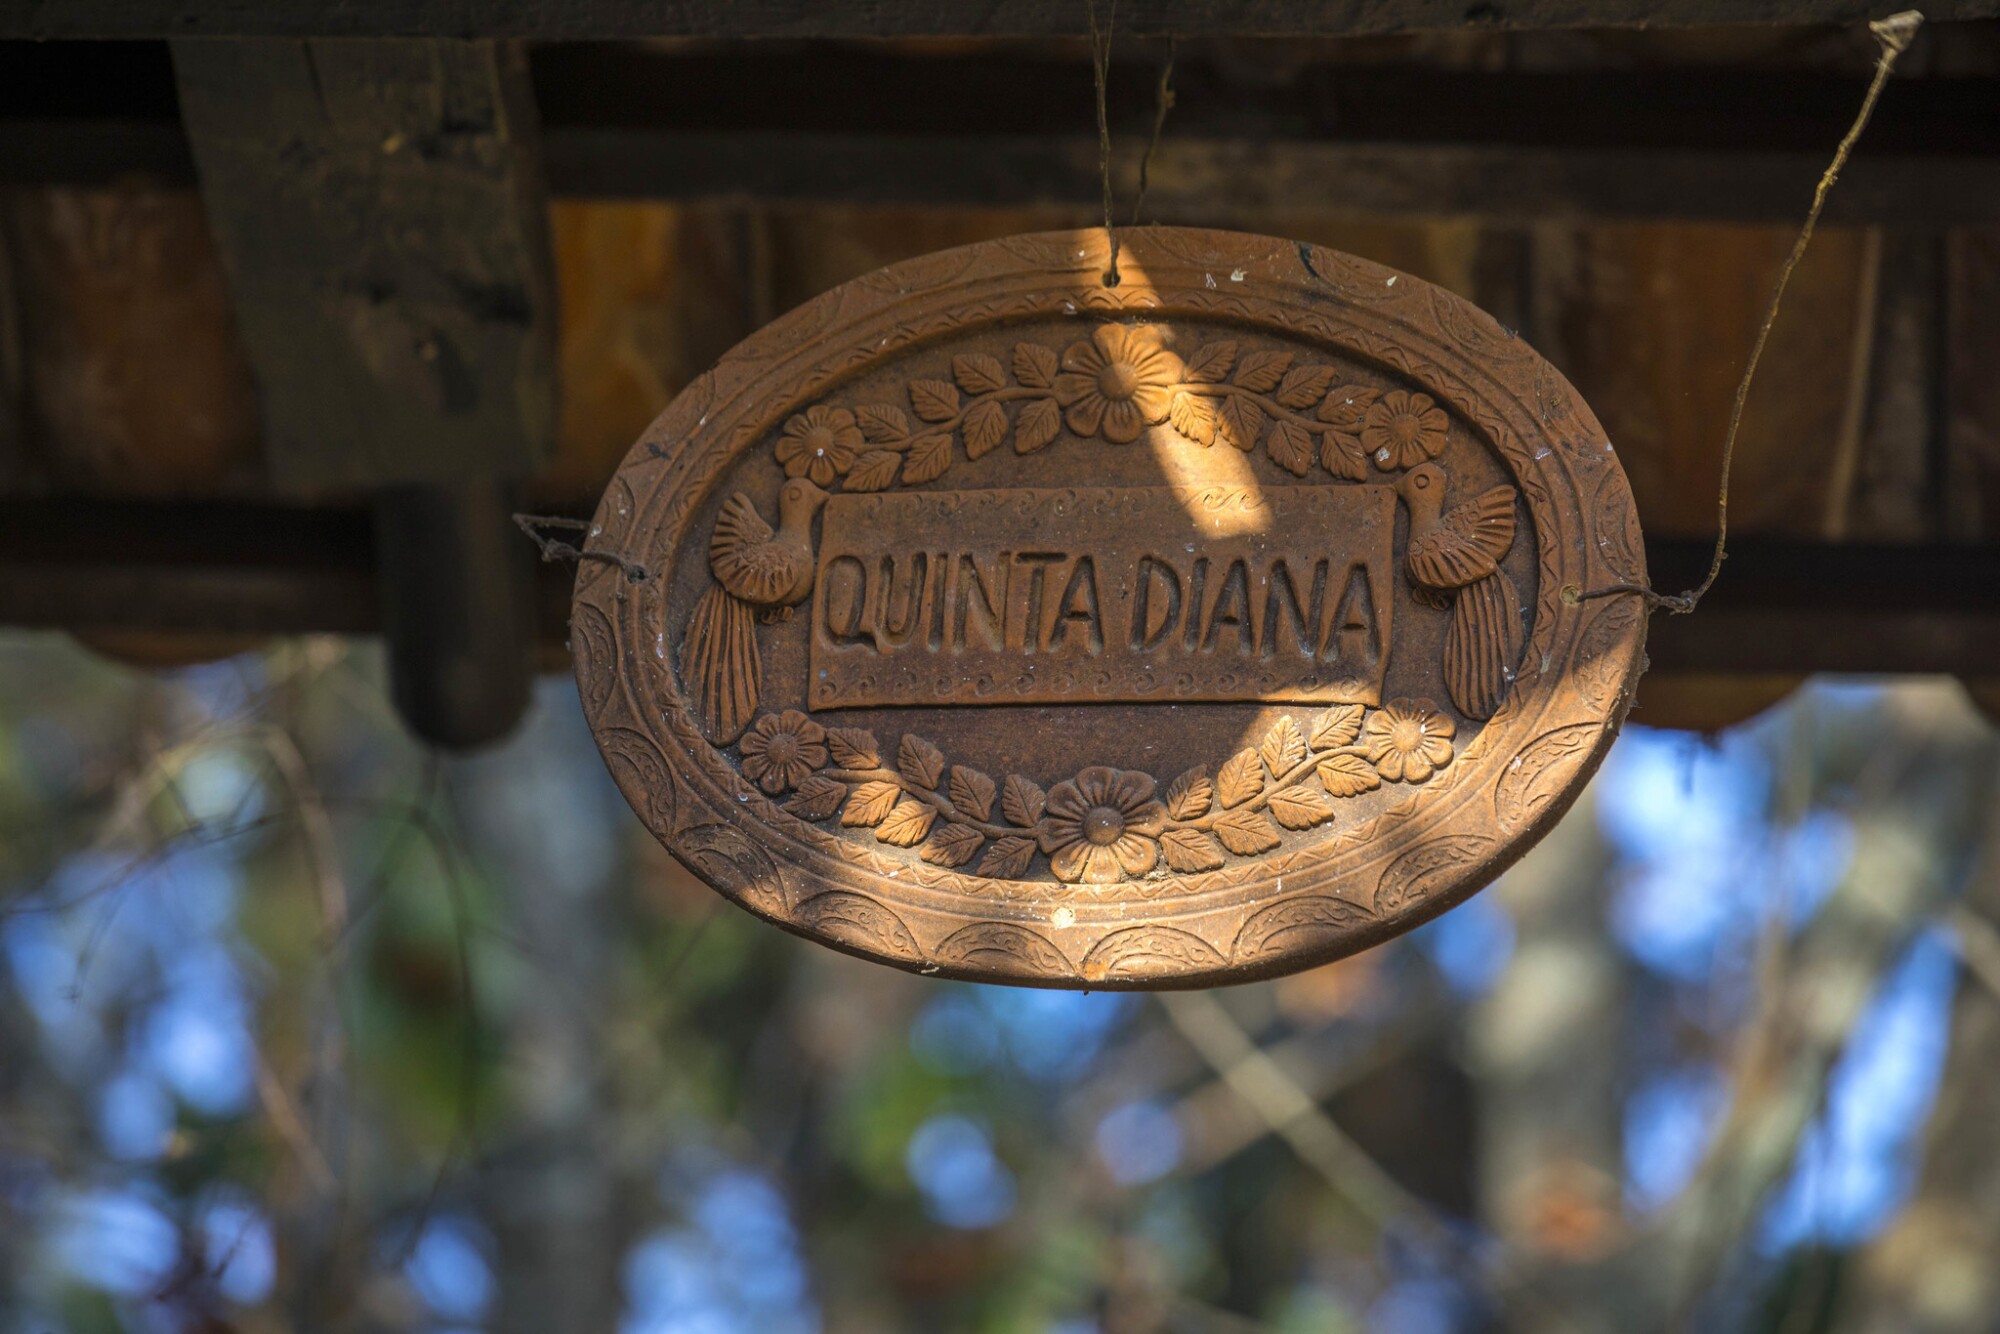 A terra cotta sign reads Quinta Diana.